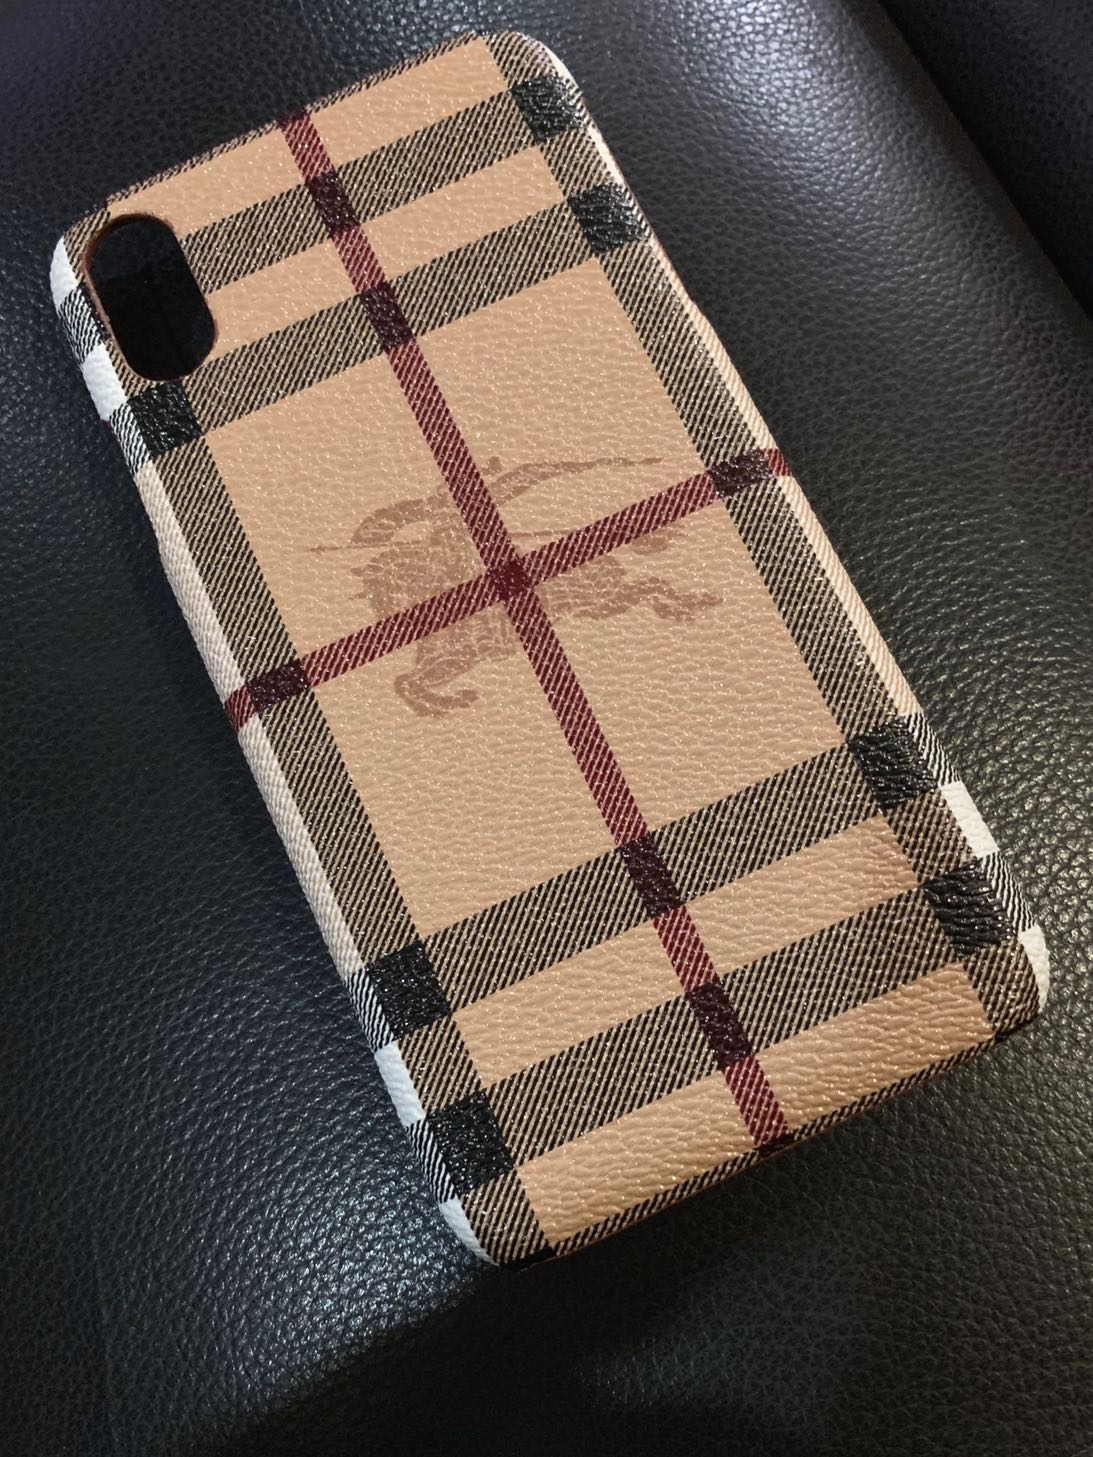 burberry case iphone